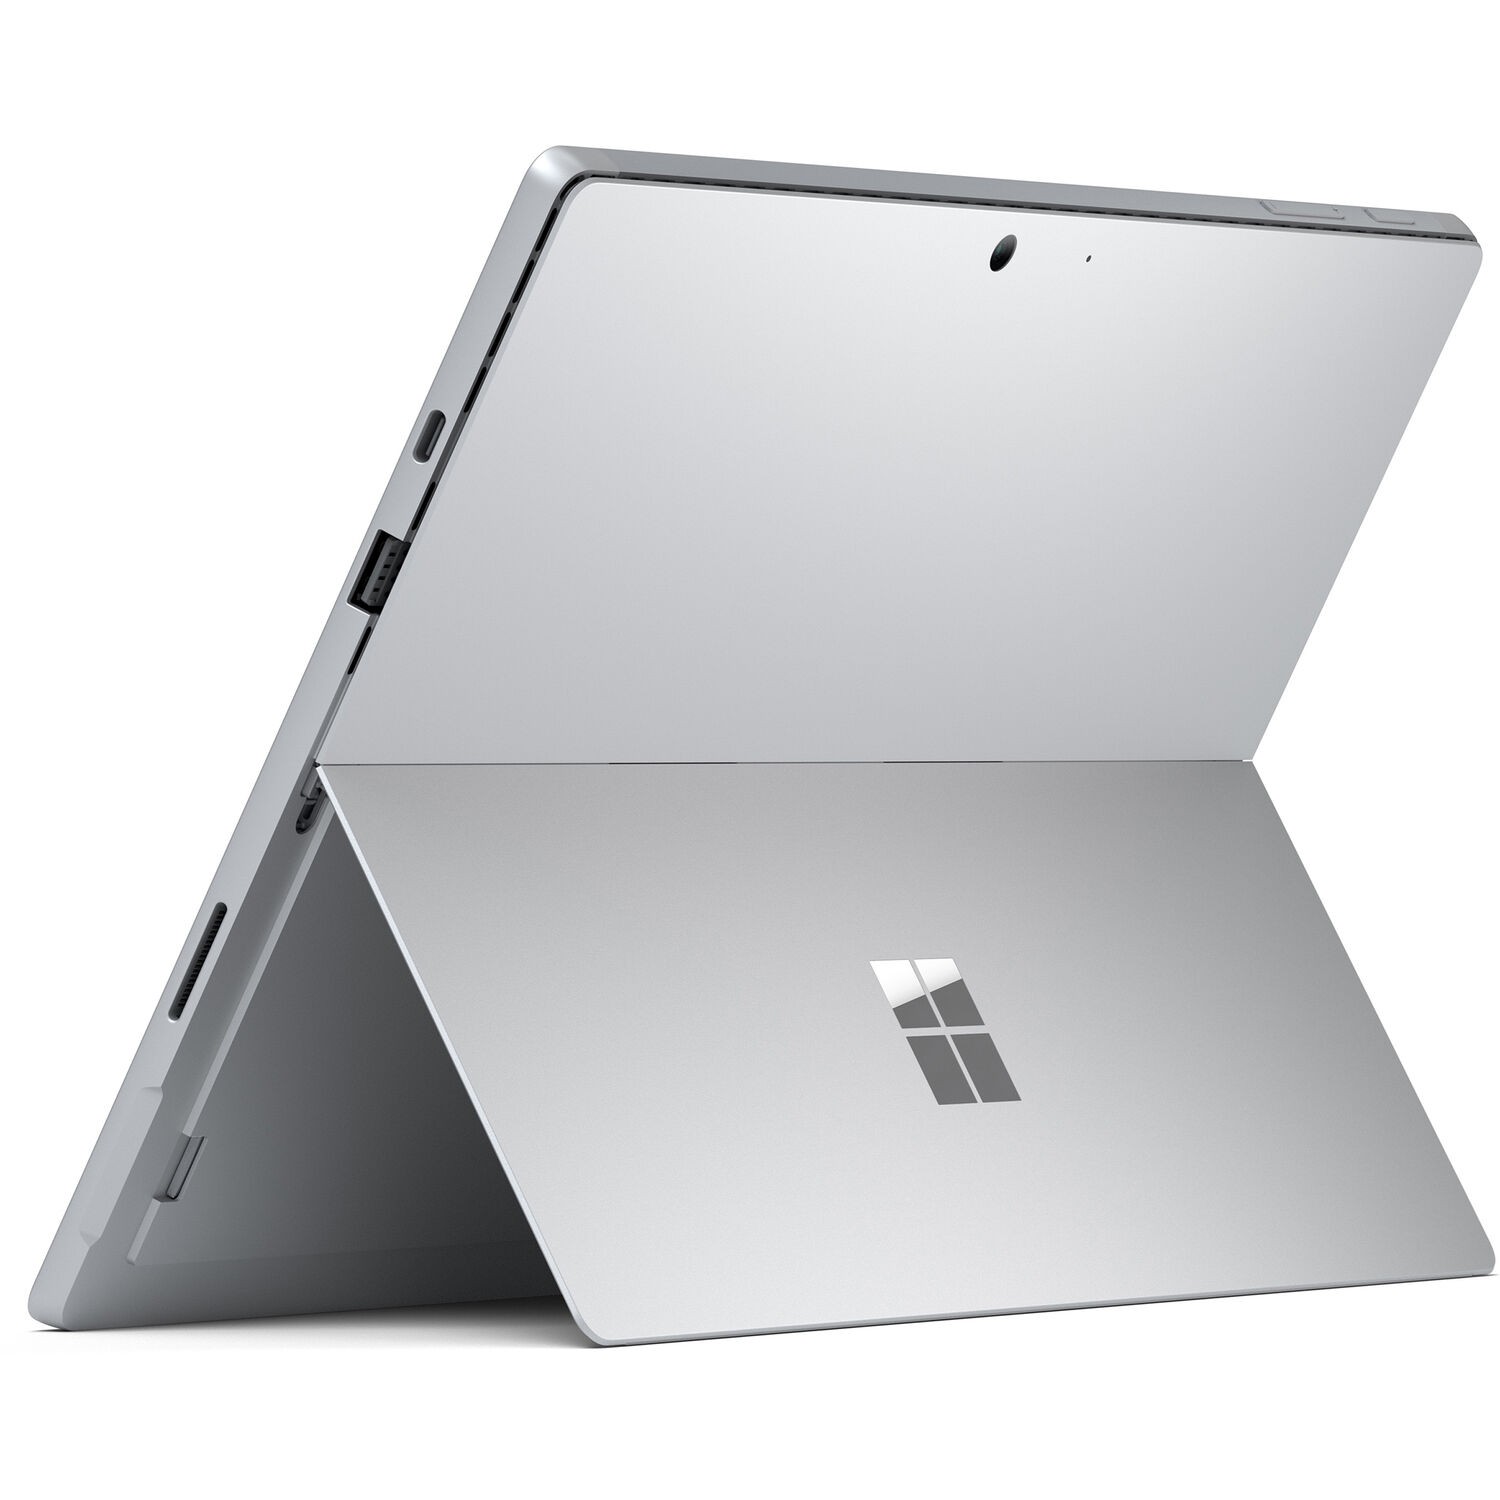 تبلت مایکروسافت مدل Surface Pro 7 Plus – G ظرفیت 1 ترابایت به همراه کیبورد Black Type Cover